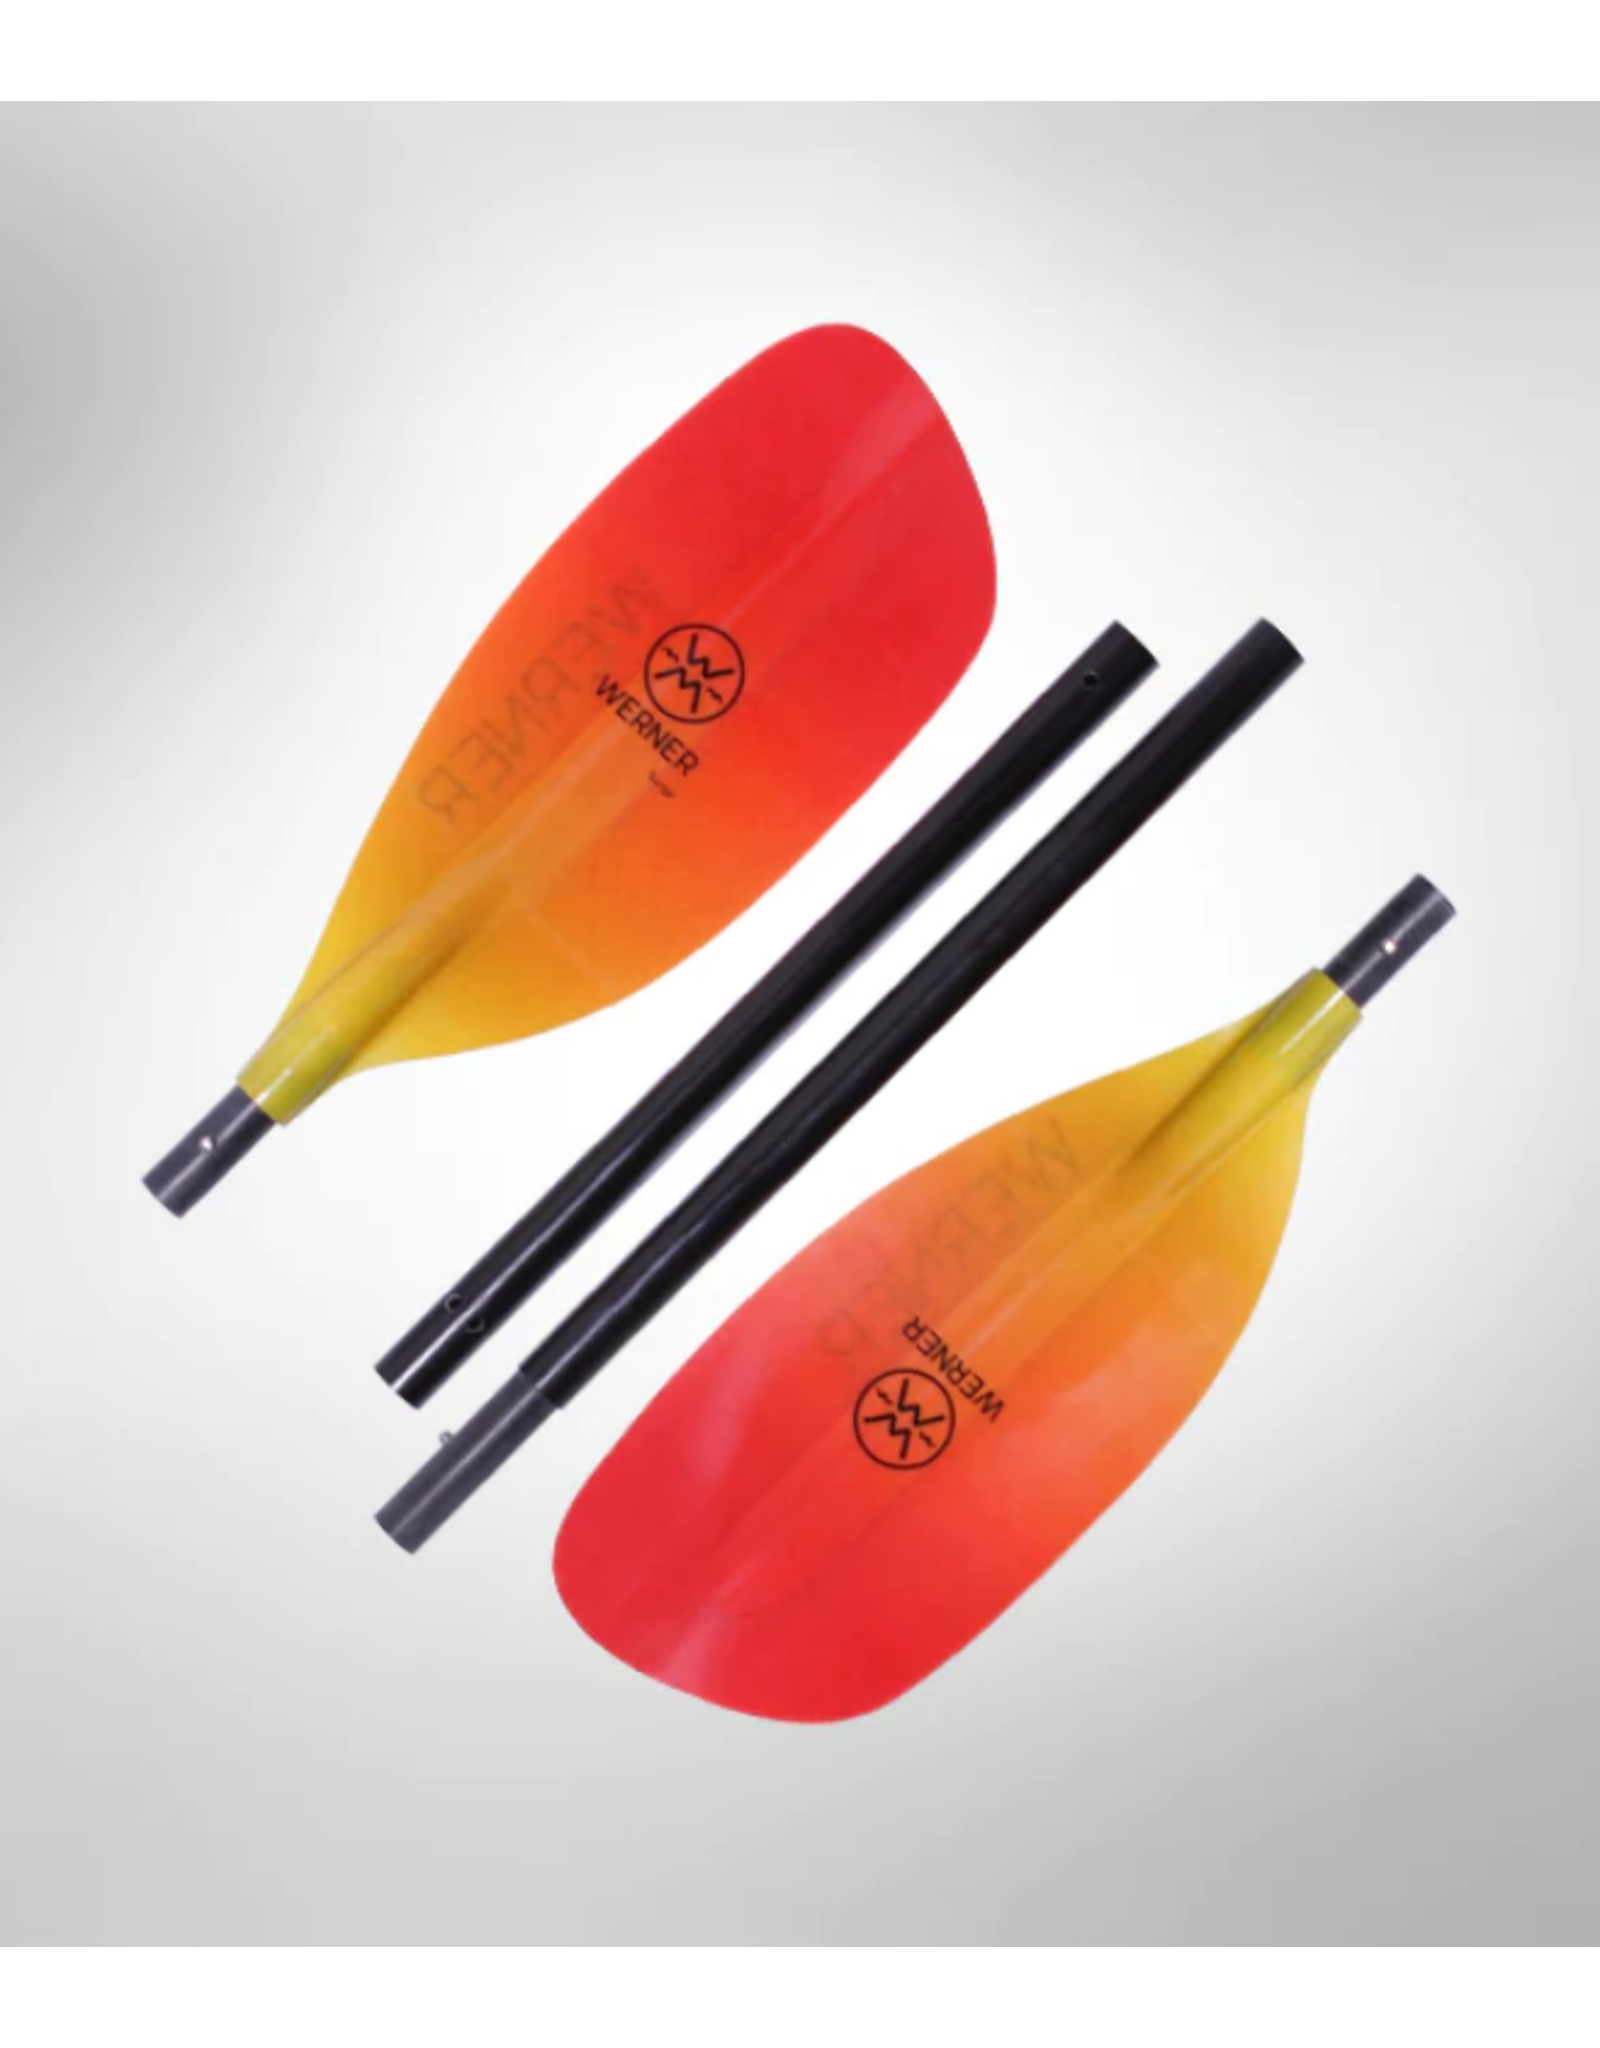 Werner Werner paddle Surge 4pc straight shaft R30 203 cm FG Blaze